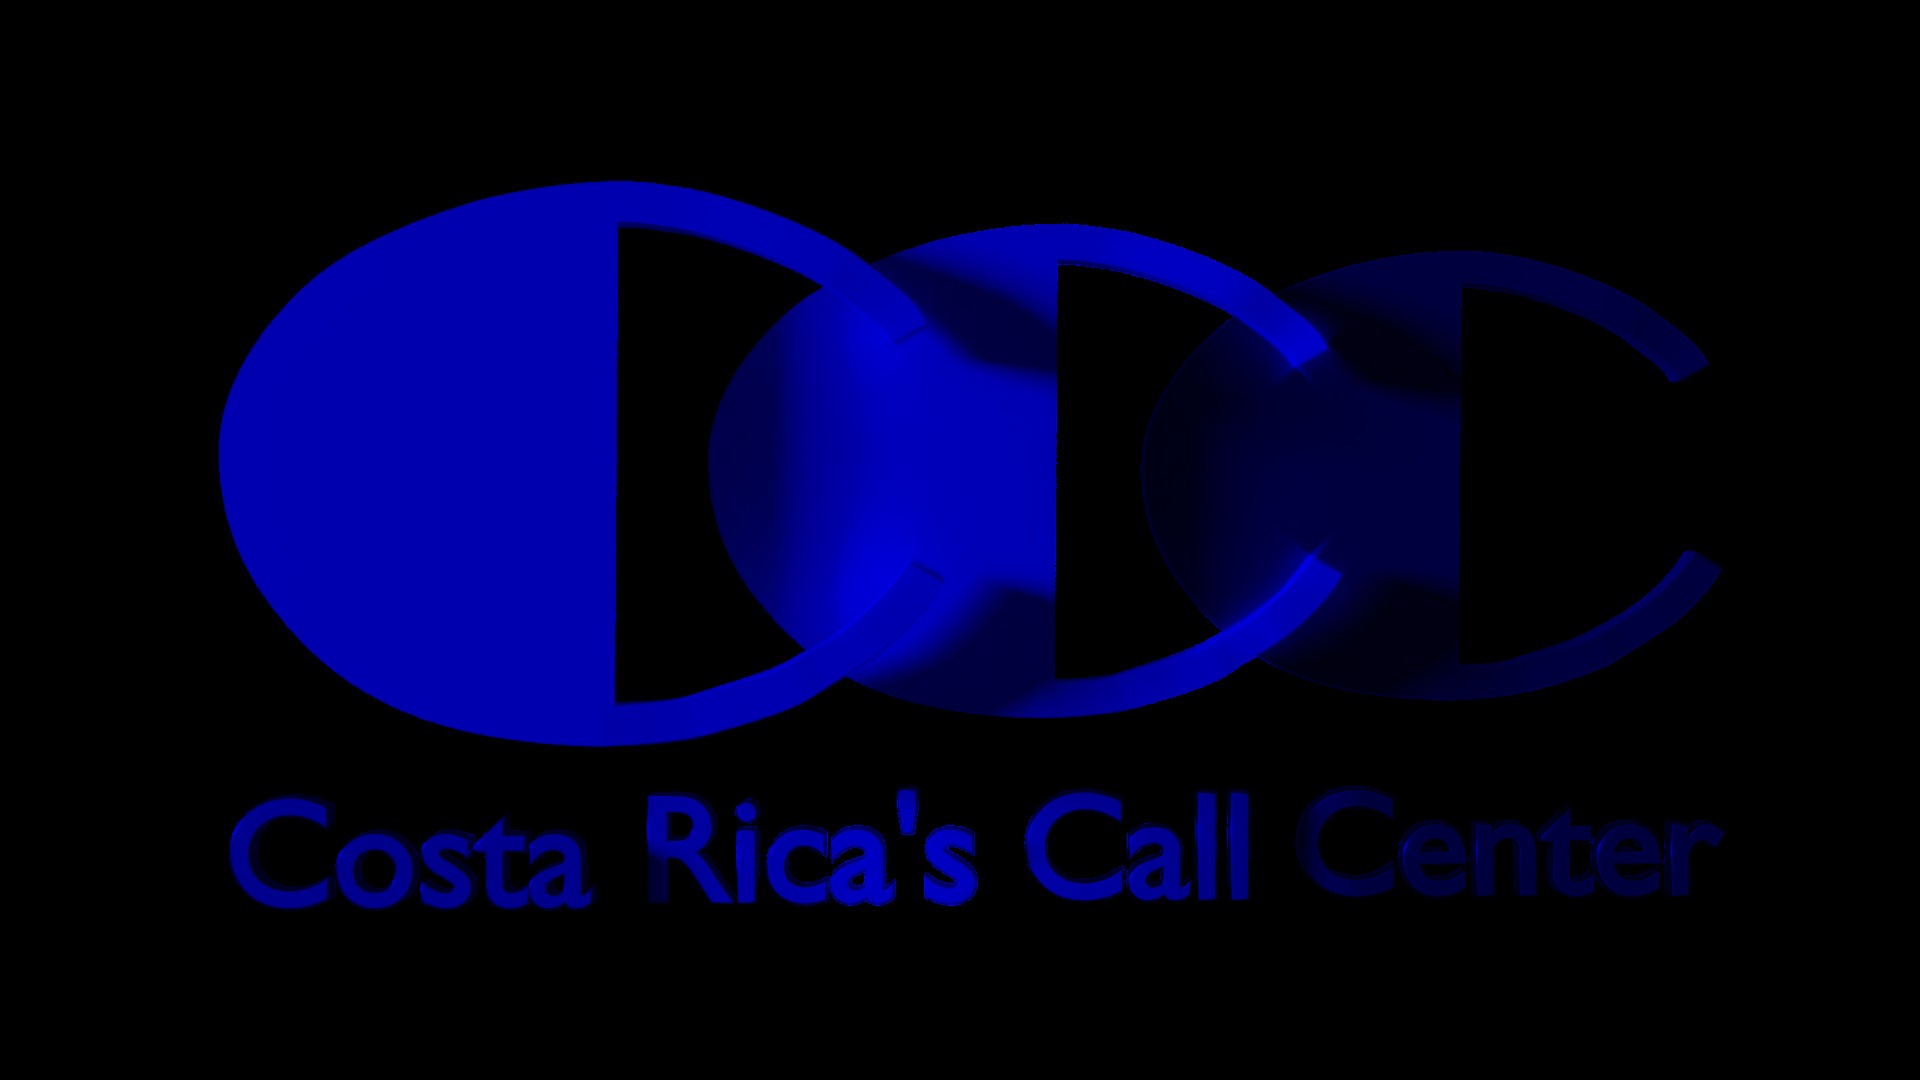 CALL CENTRE SECTOR COSTA RICA.jpg  by richardblank